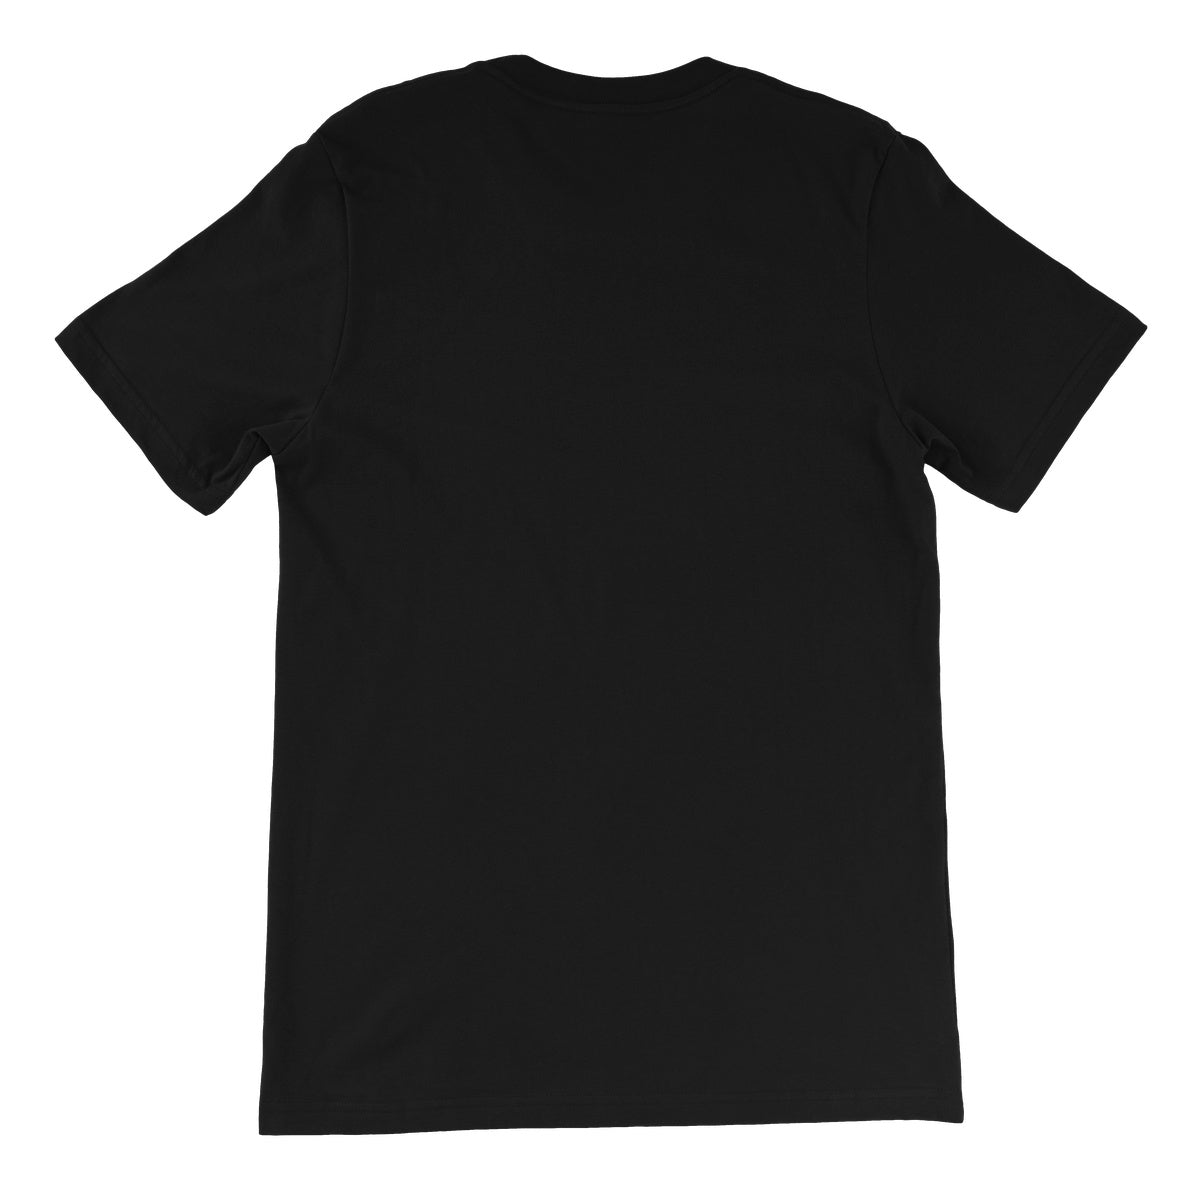 TNT Extreme Wrestling Dead Or Alive Unisex Short Sleeve T-Shirt